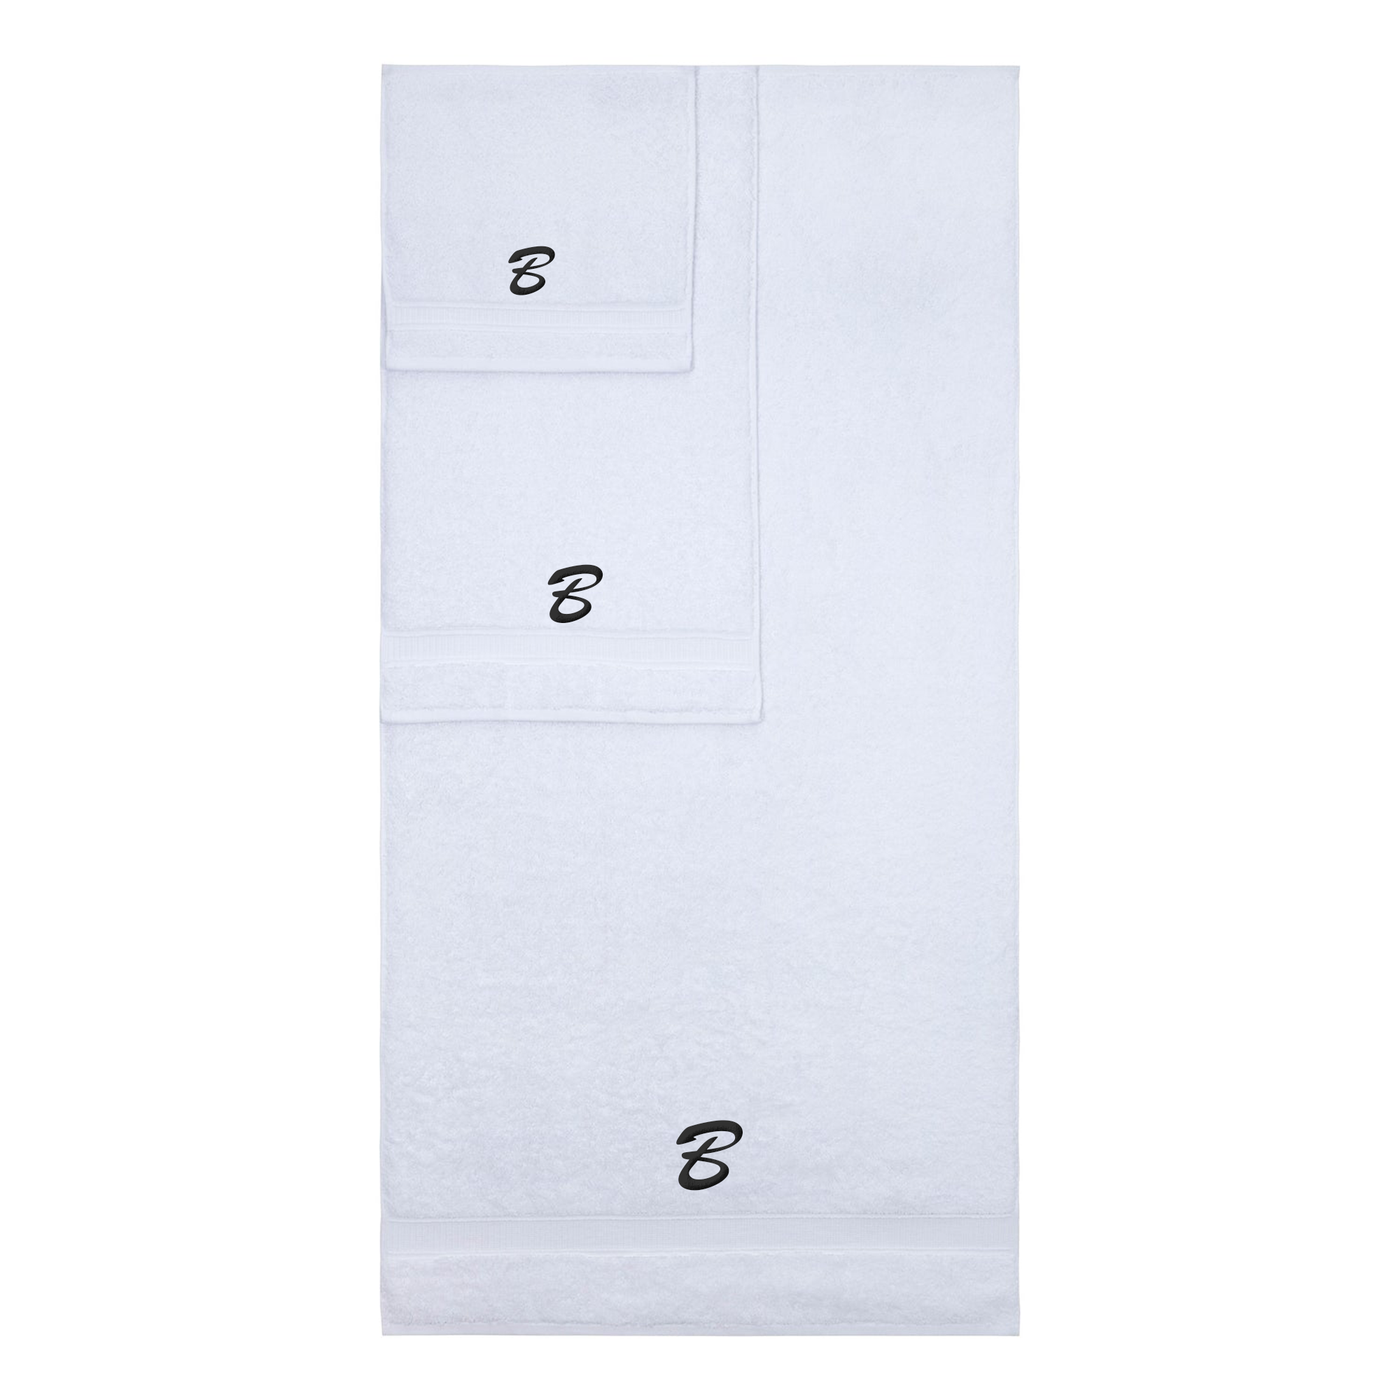 Monogrammed Towels by La'Hammam